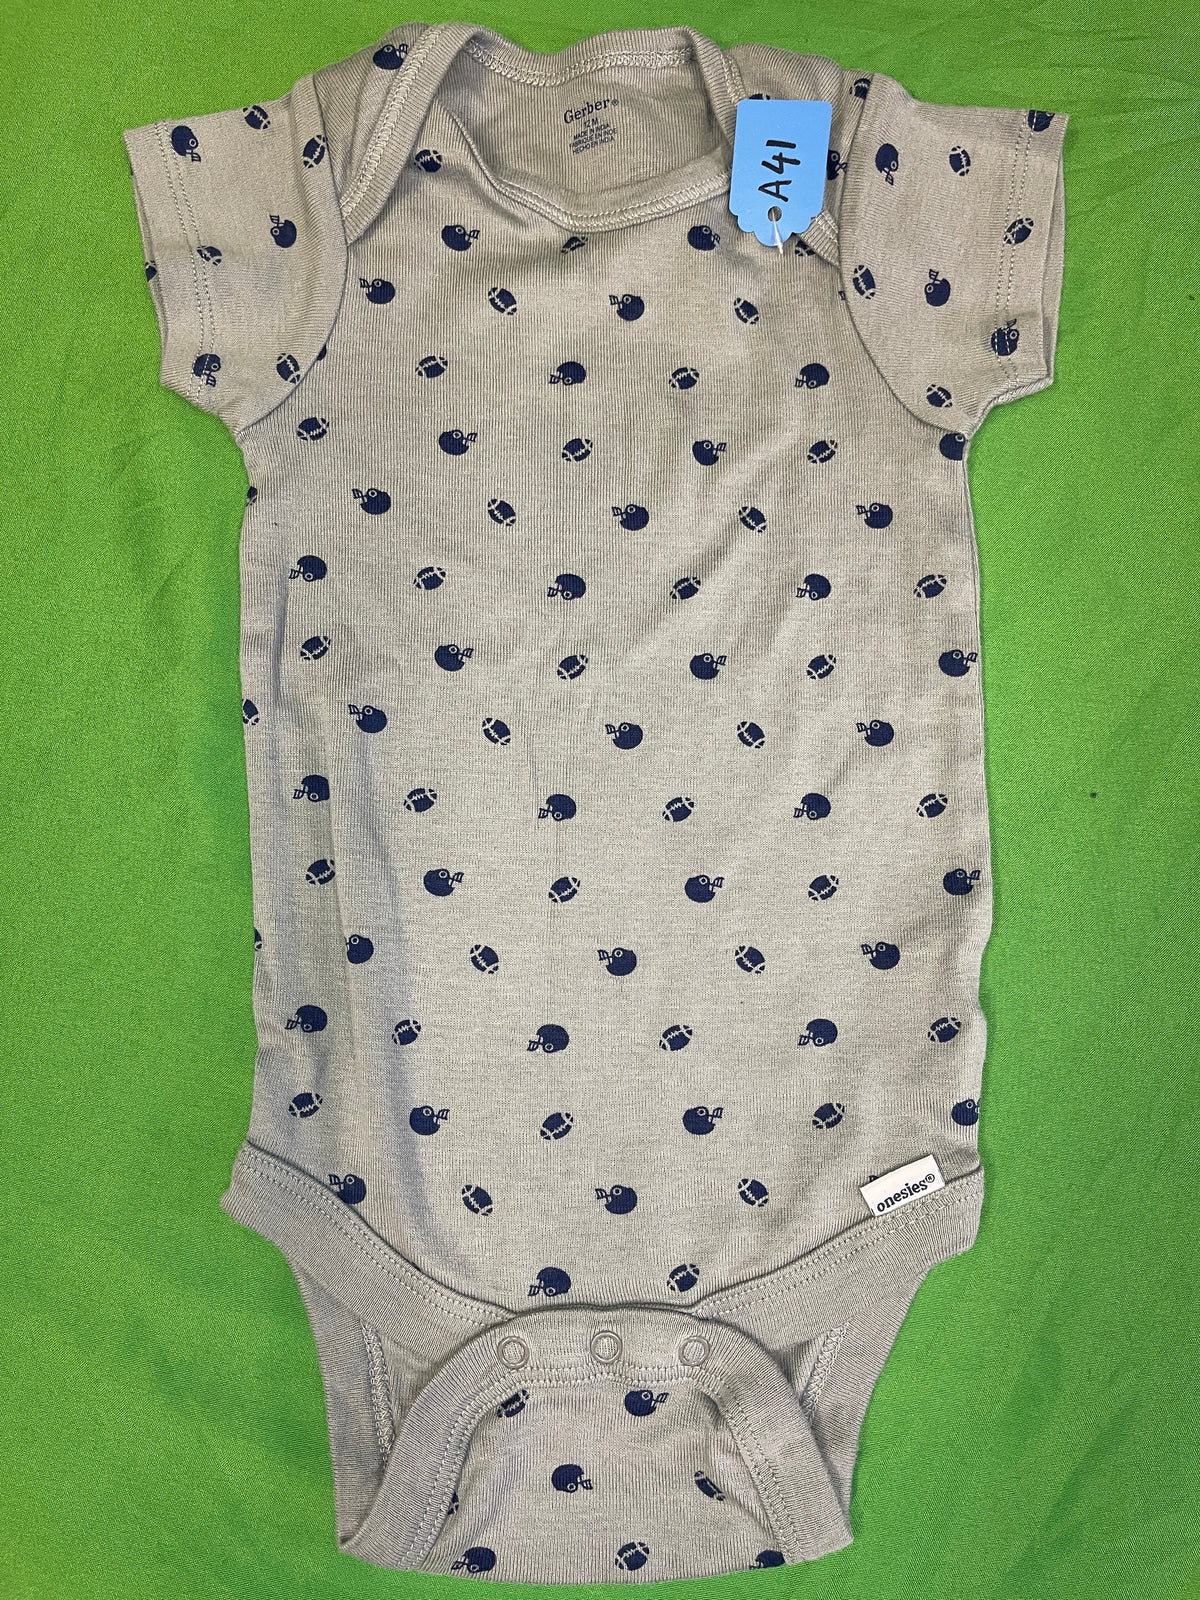 American Football Pattern Bodysuit/Vest Infant Baby 12 Months